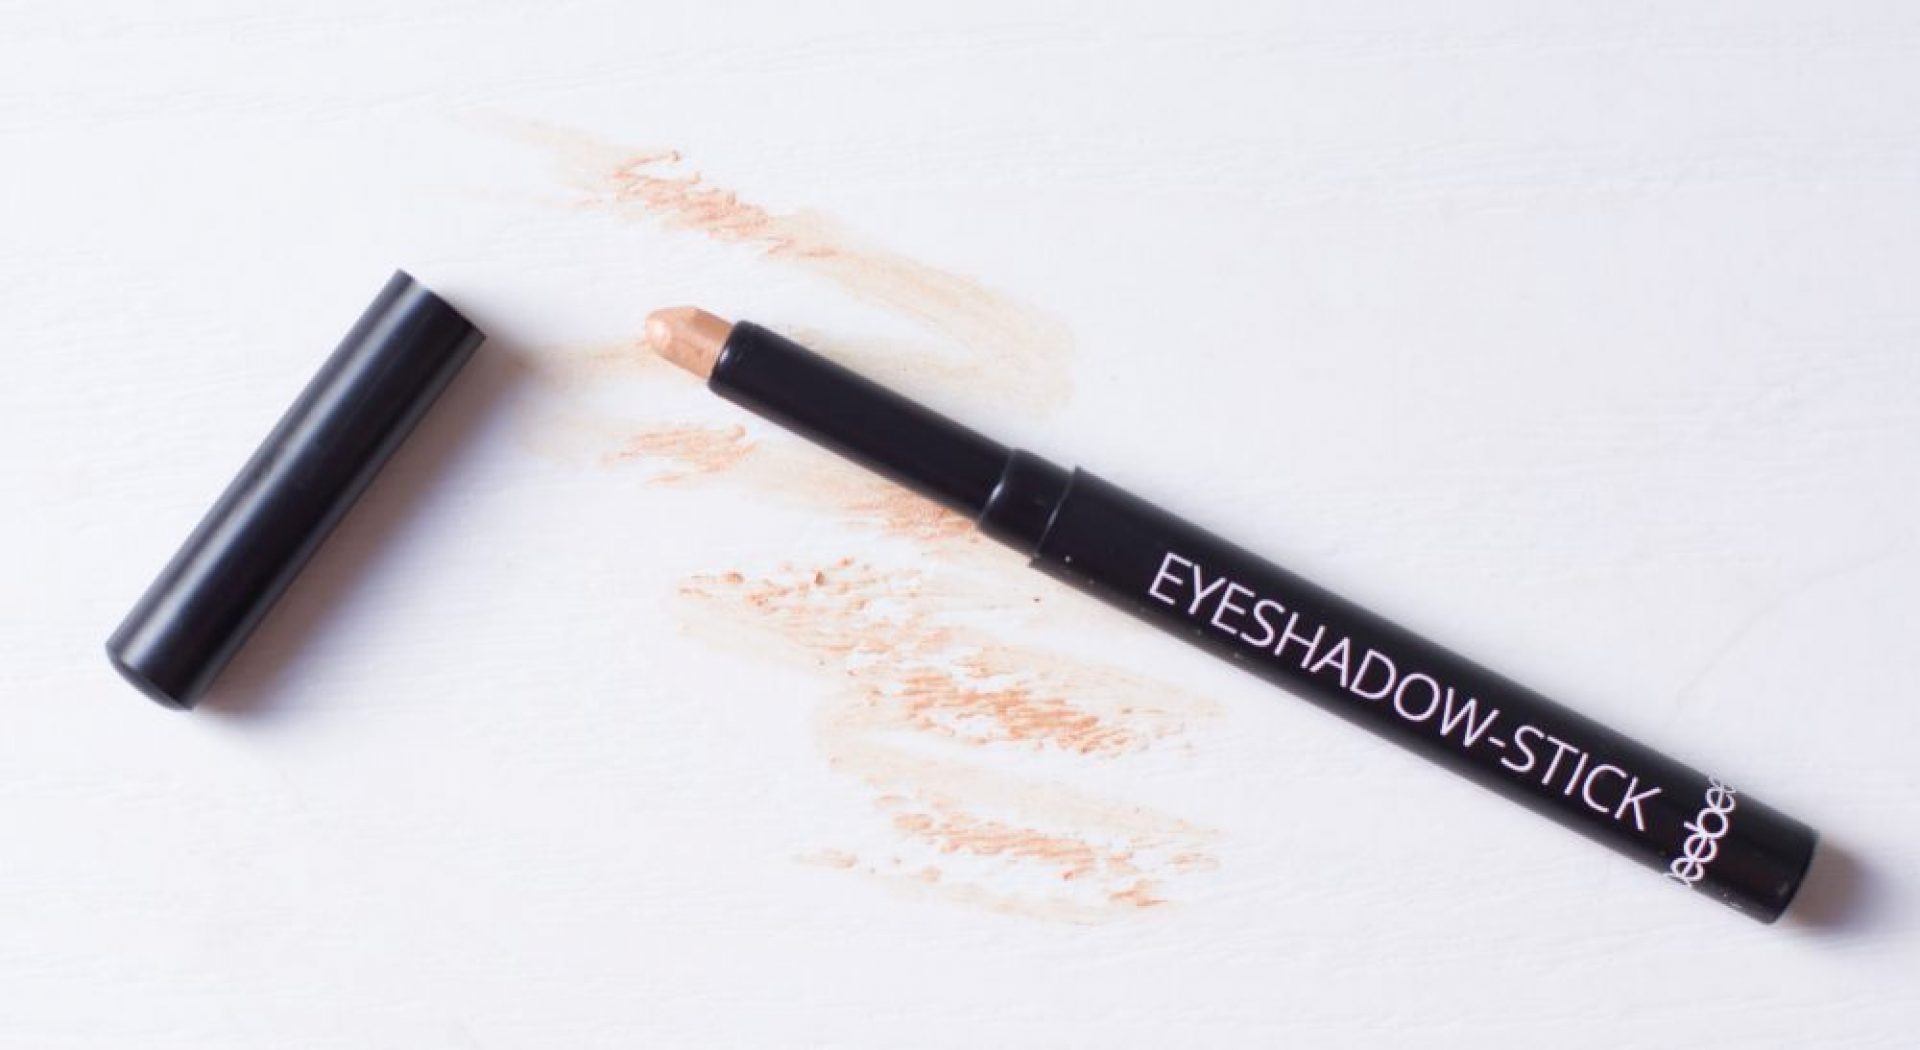 Eyeshadow stick - Limited Edition special StyleTone box